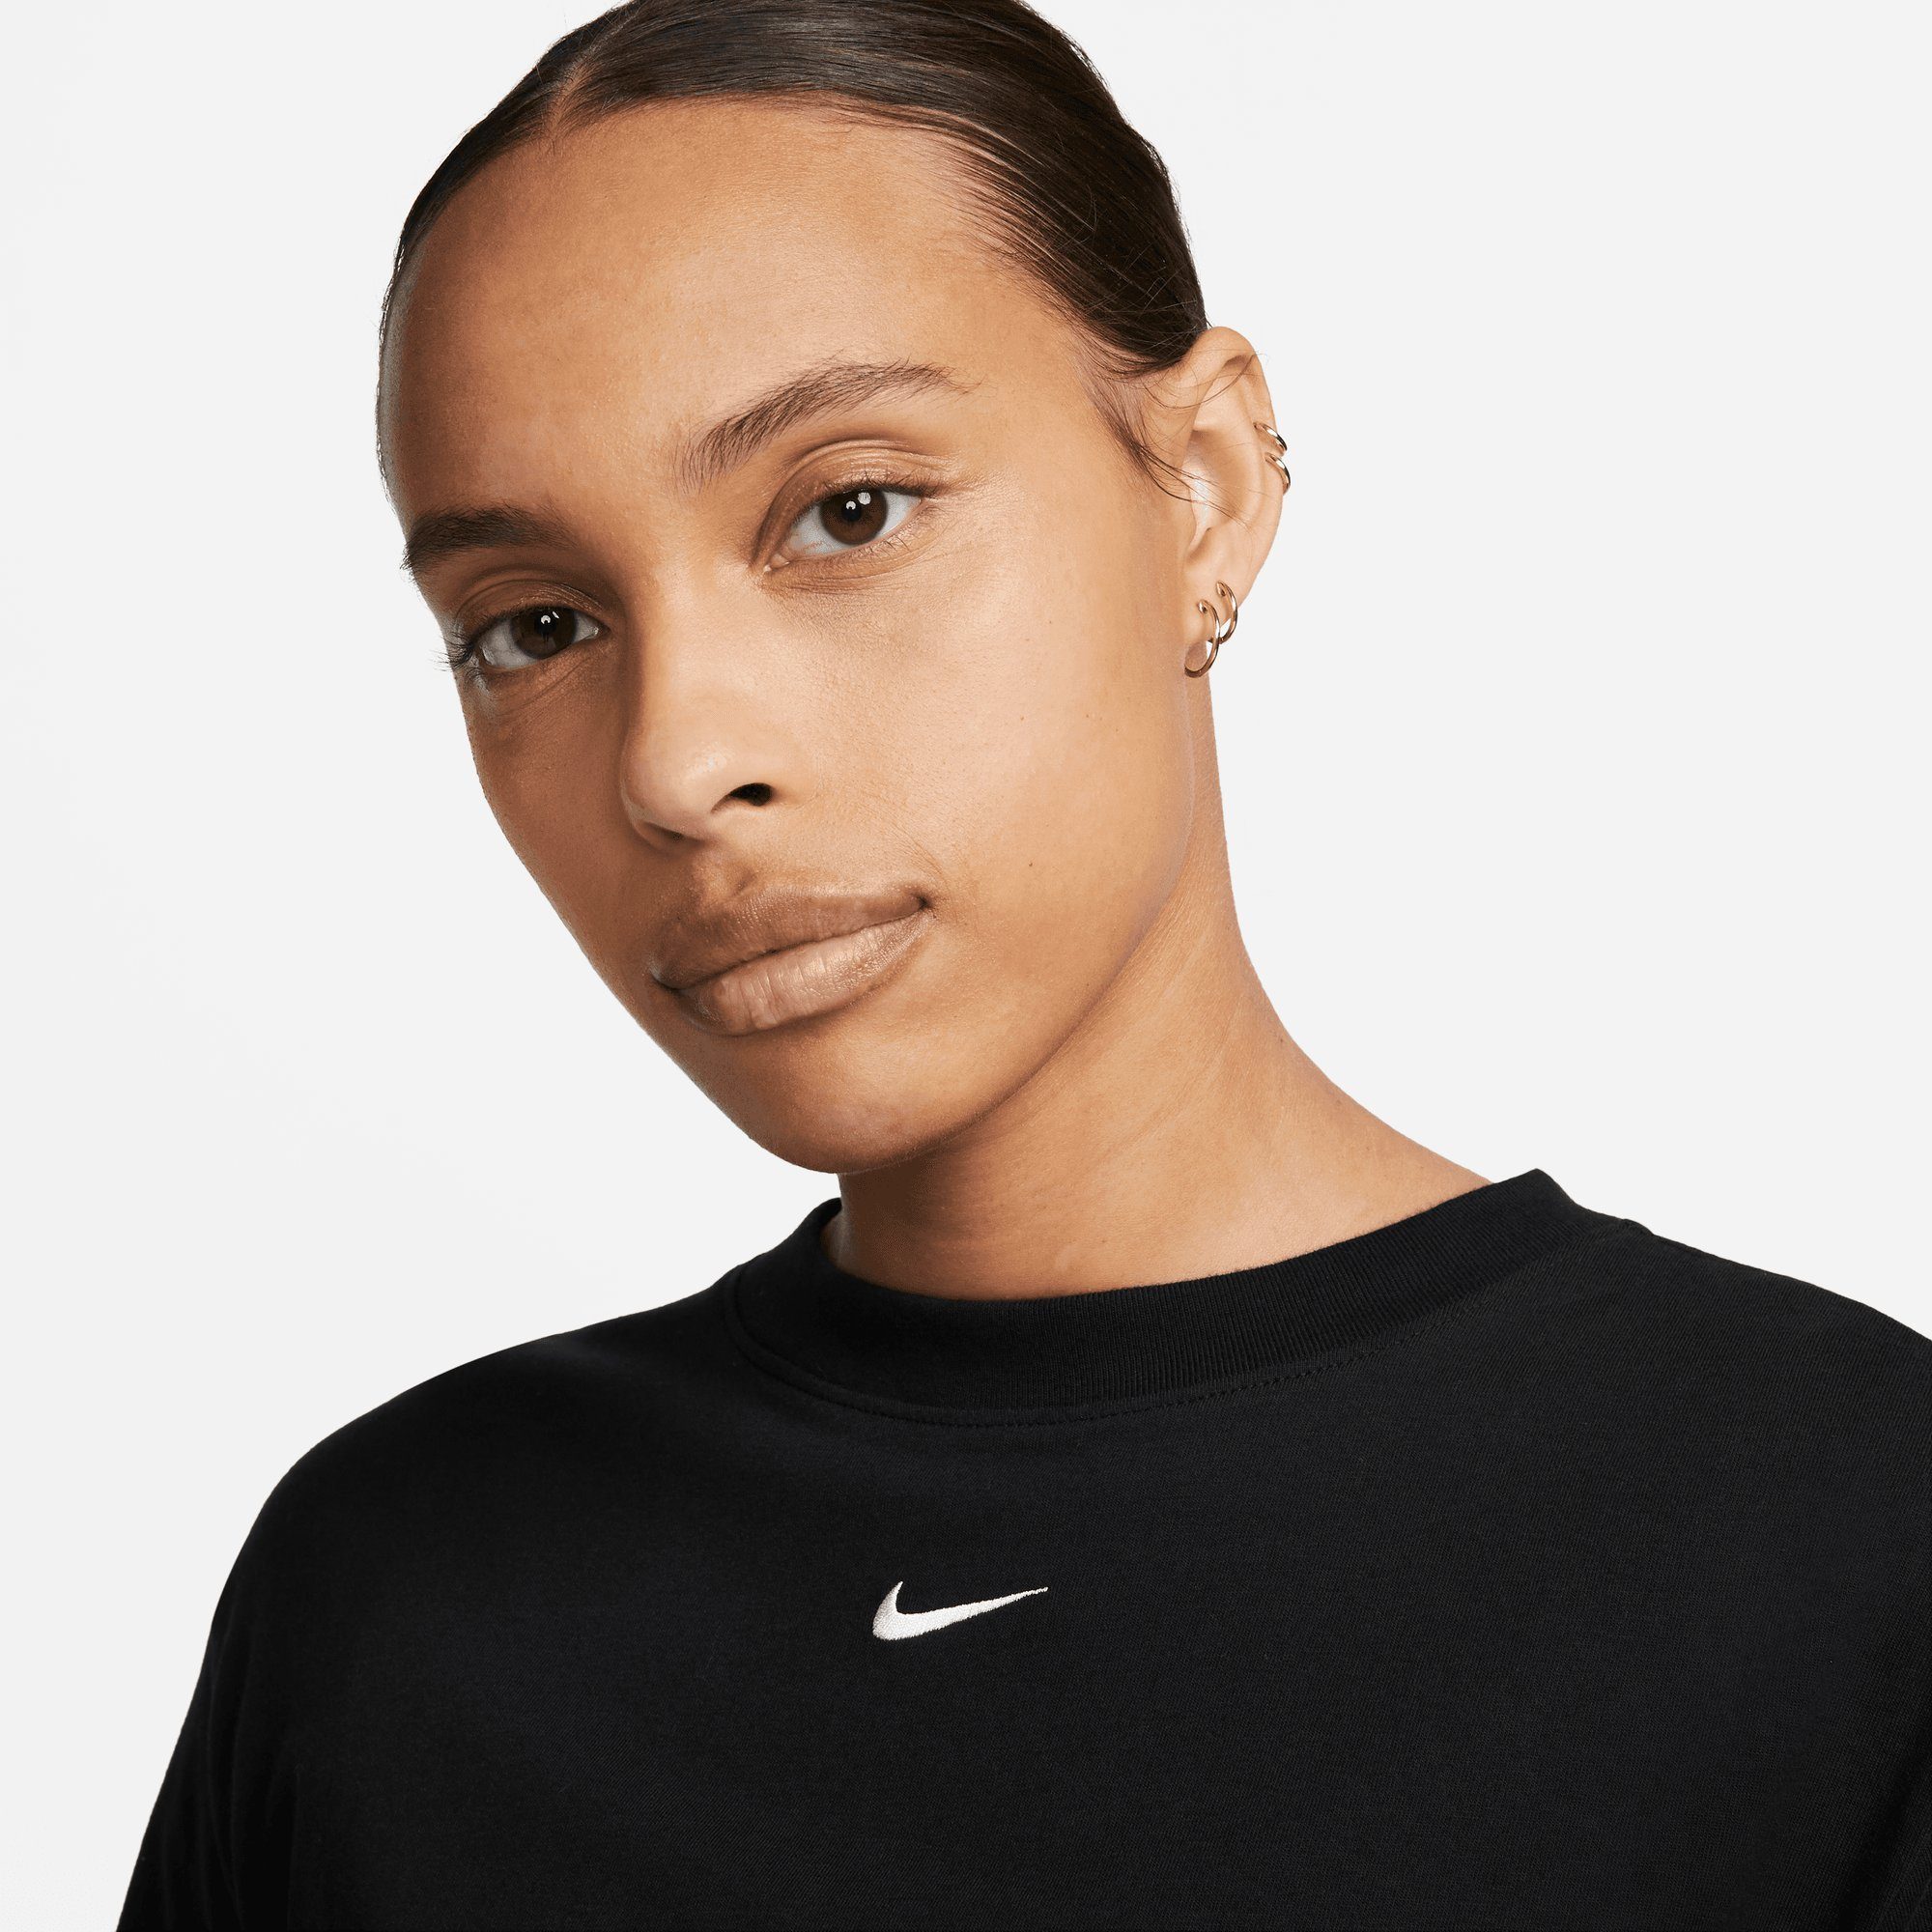 Nike WOMEN'S SHORT-SLEEVE DRESS BLACK/WHITE Sportswear Sommerkleid ESSENTIAL